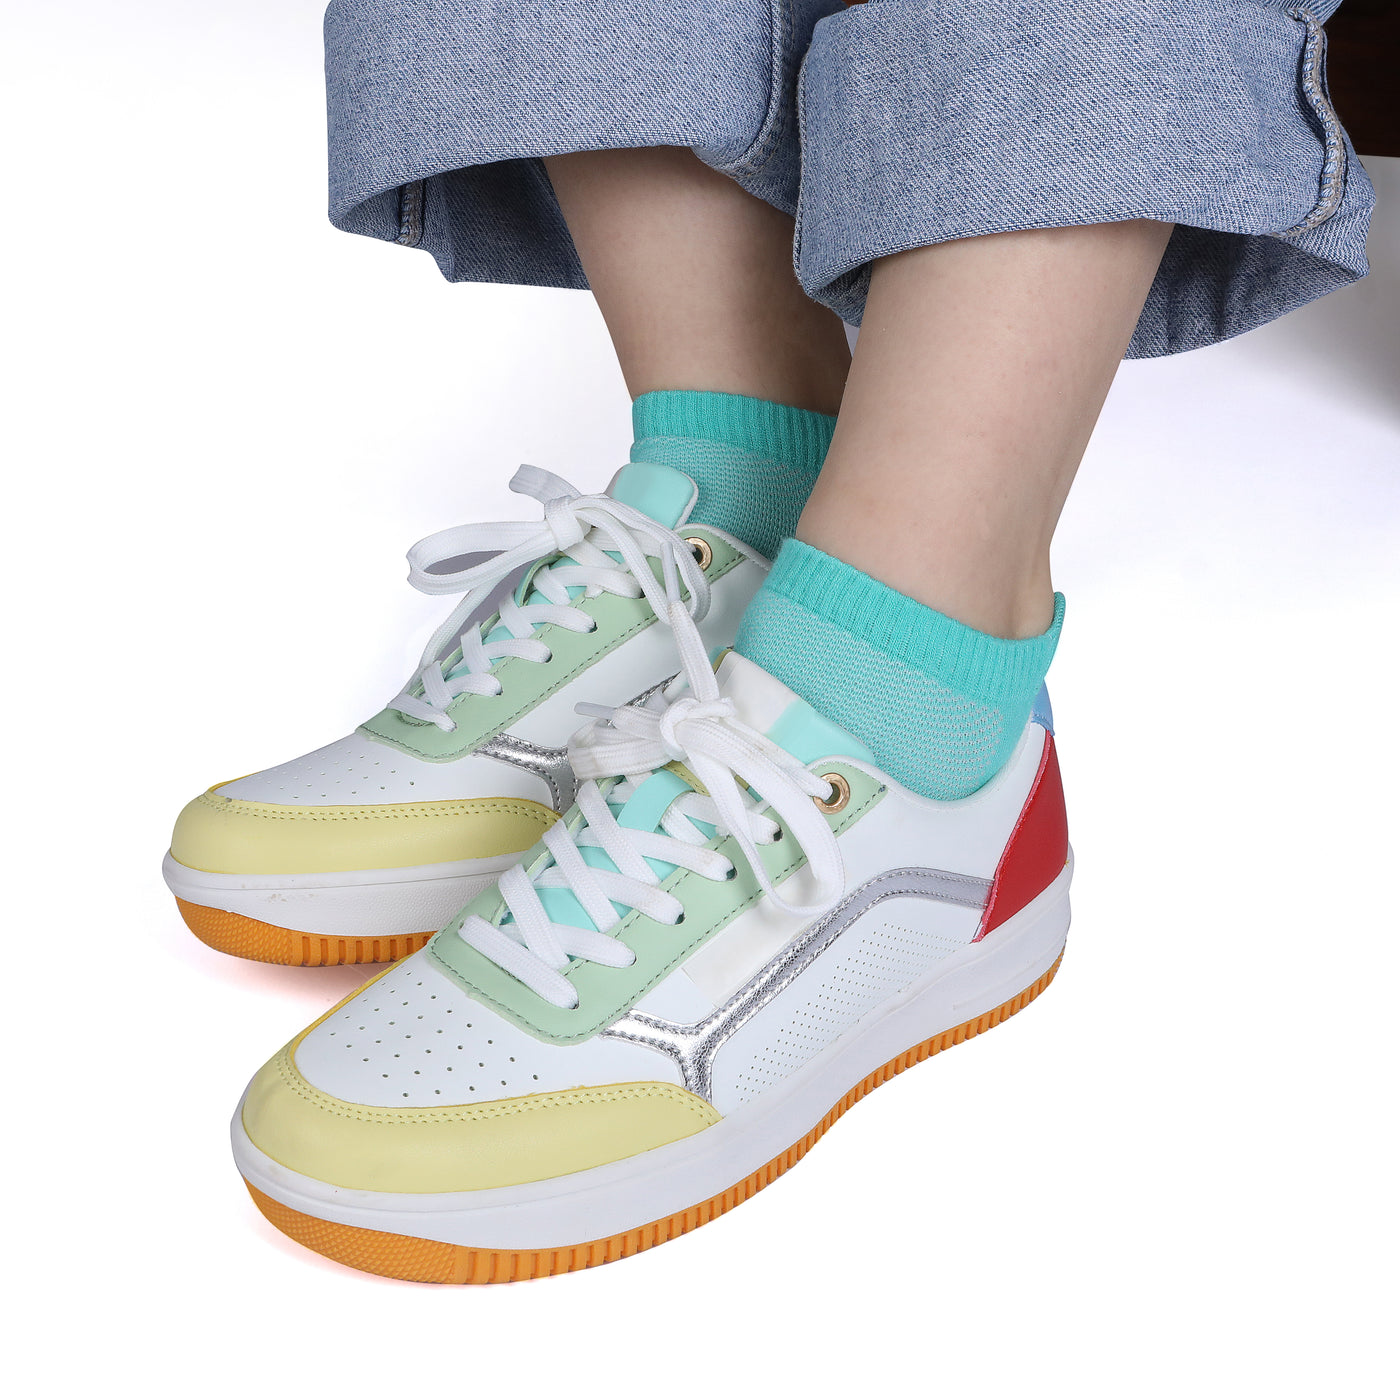 Elyfer-Mint-Green-Bamboo-Ankle-Socks-for-Women-and-Men #color_mint